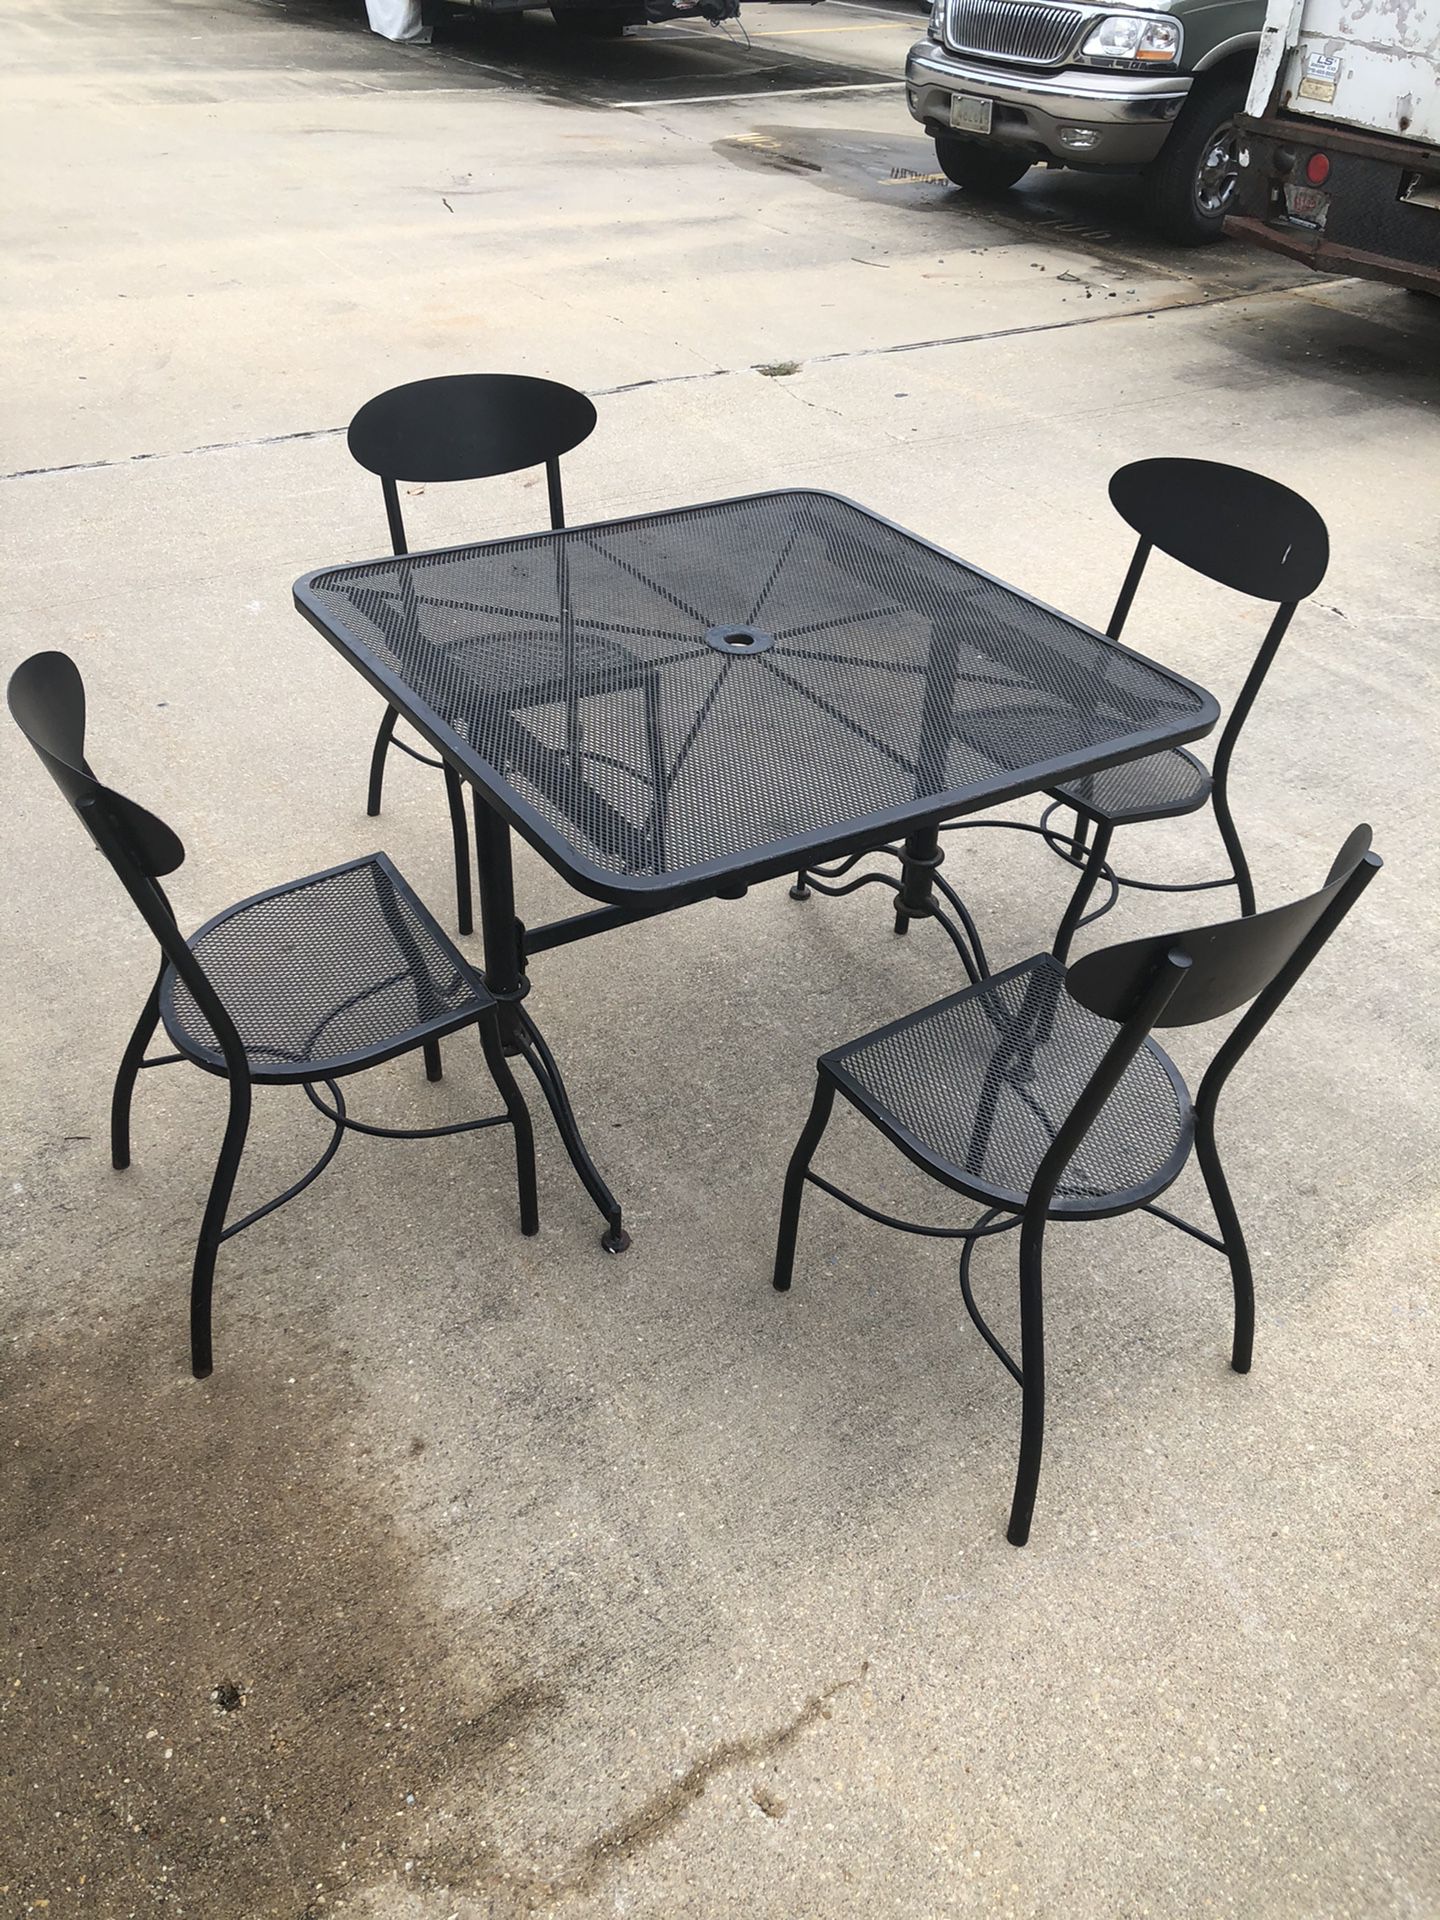 Metal patio furniture